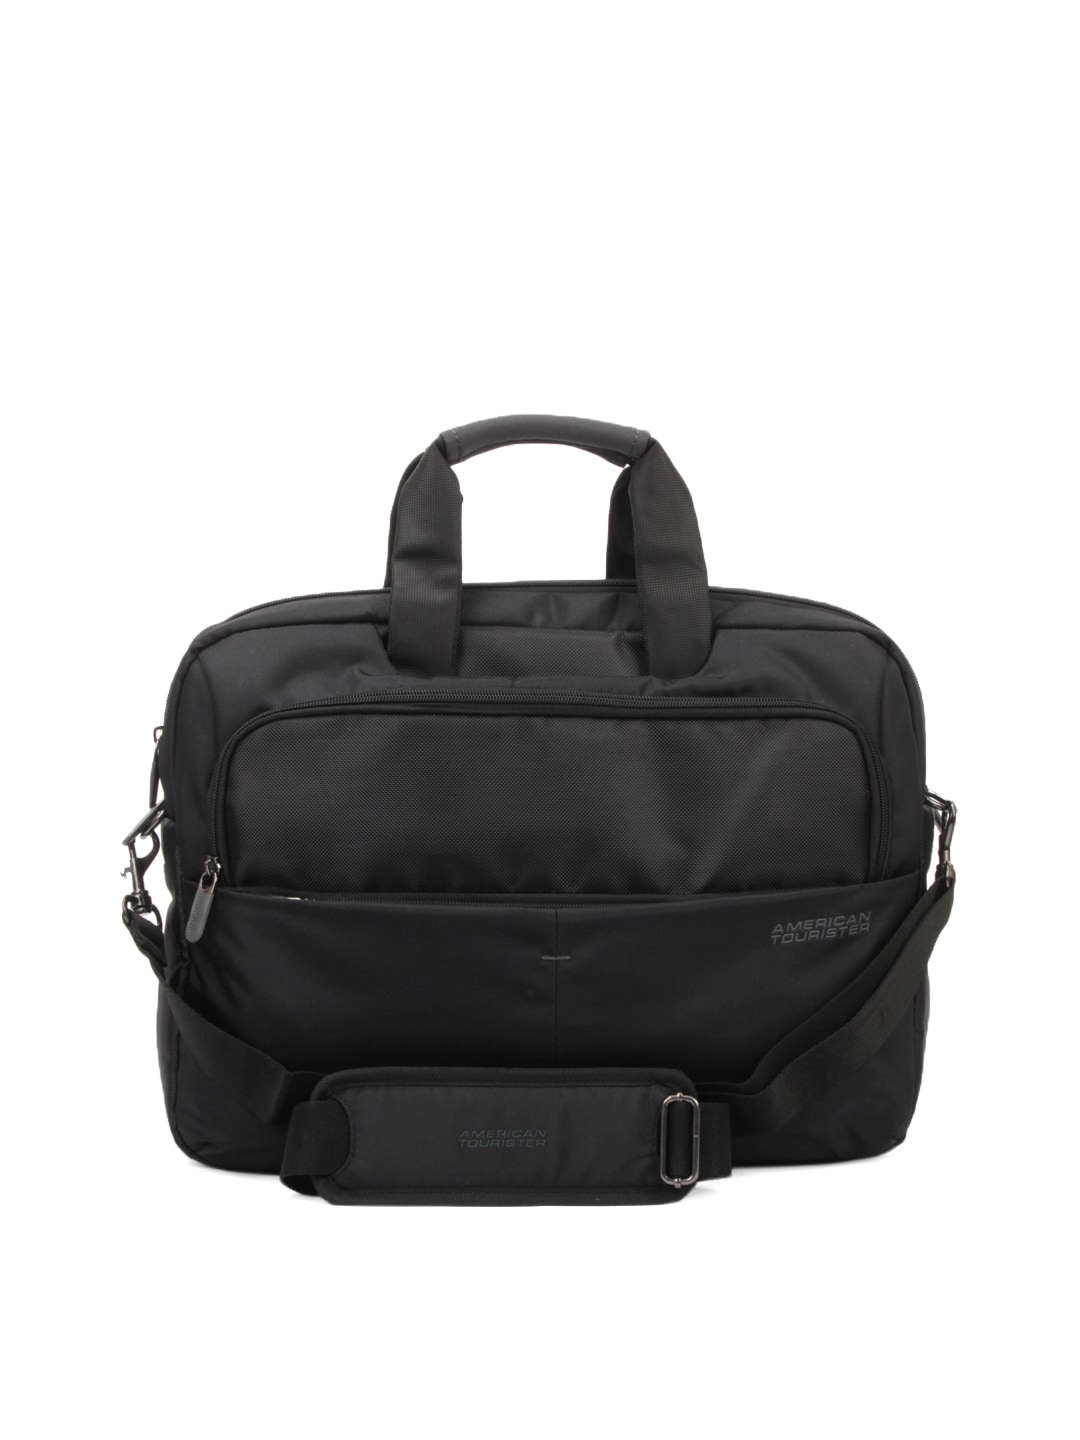 American Tourister Unisex Speedair Black Laptop Bag